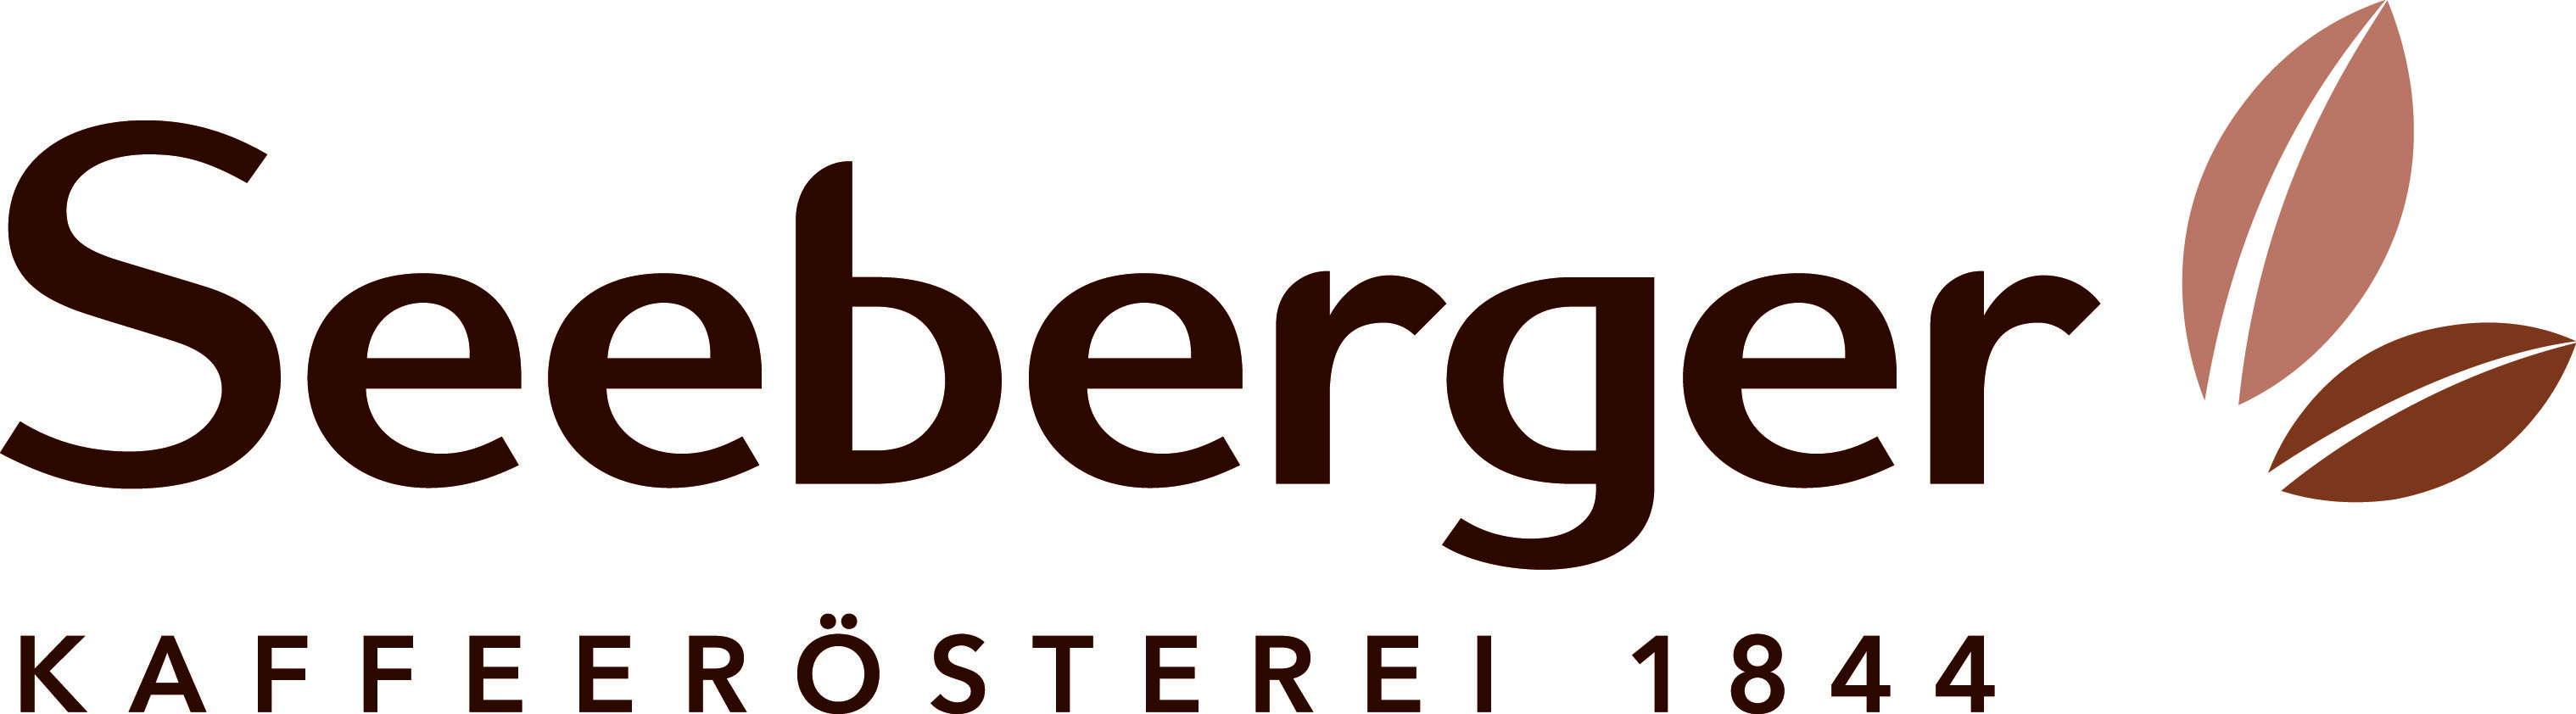 Seeberger Professional GmbH